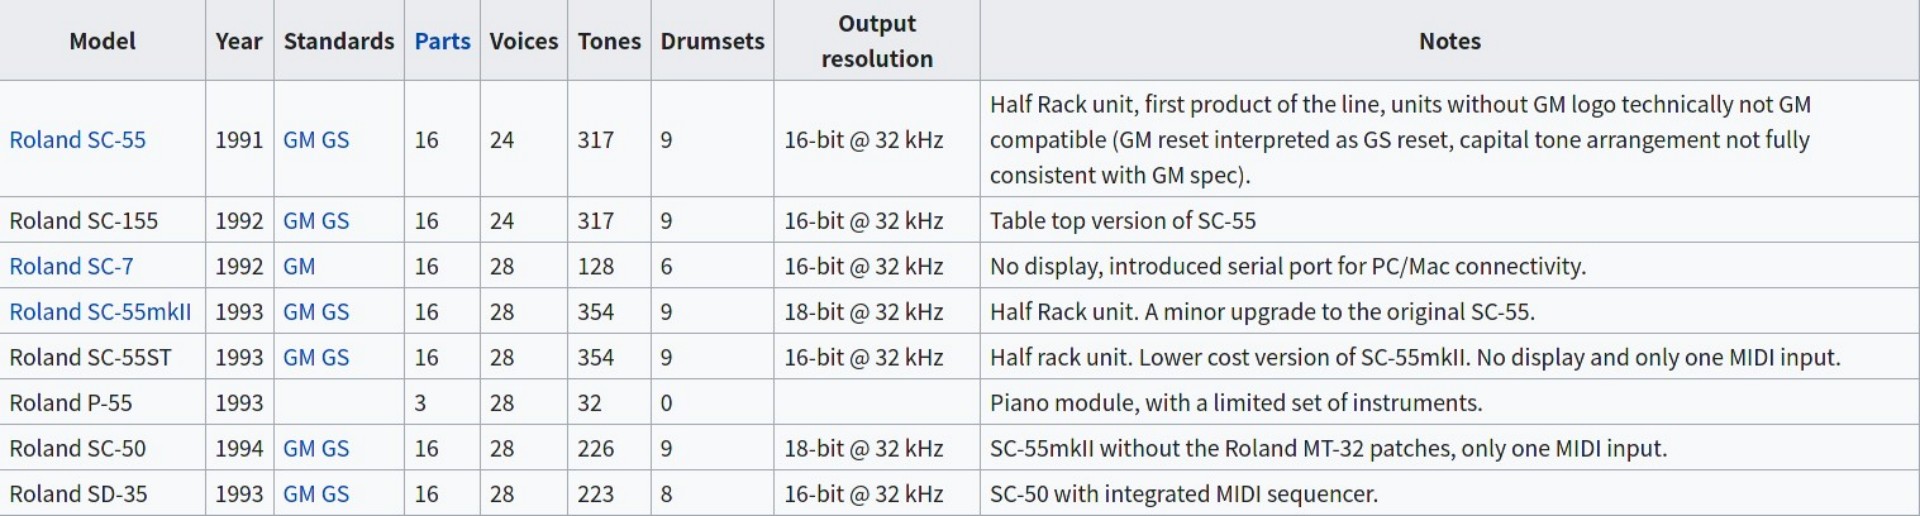 上图来源：Wikipedia “Roland Sound Canvas”